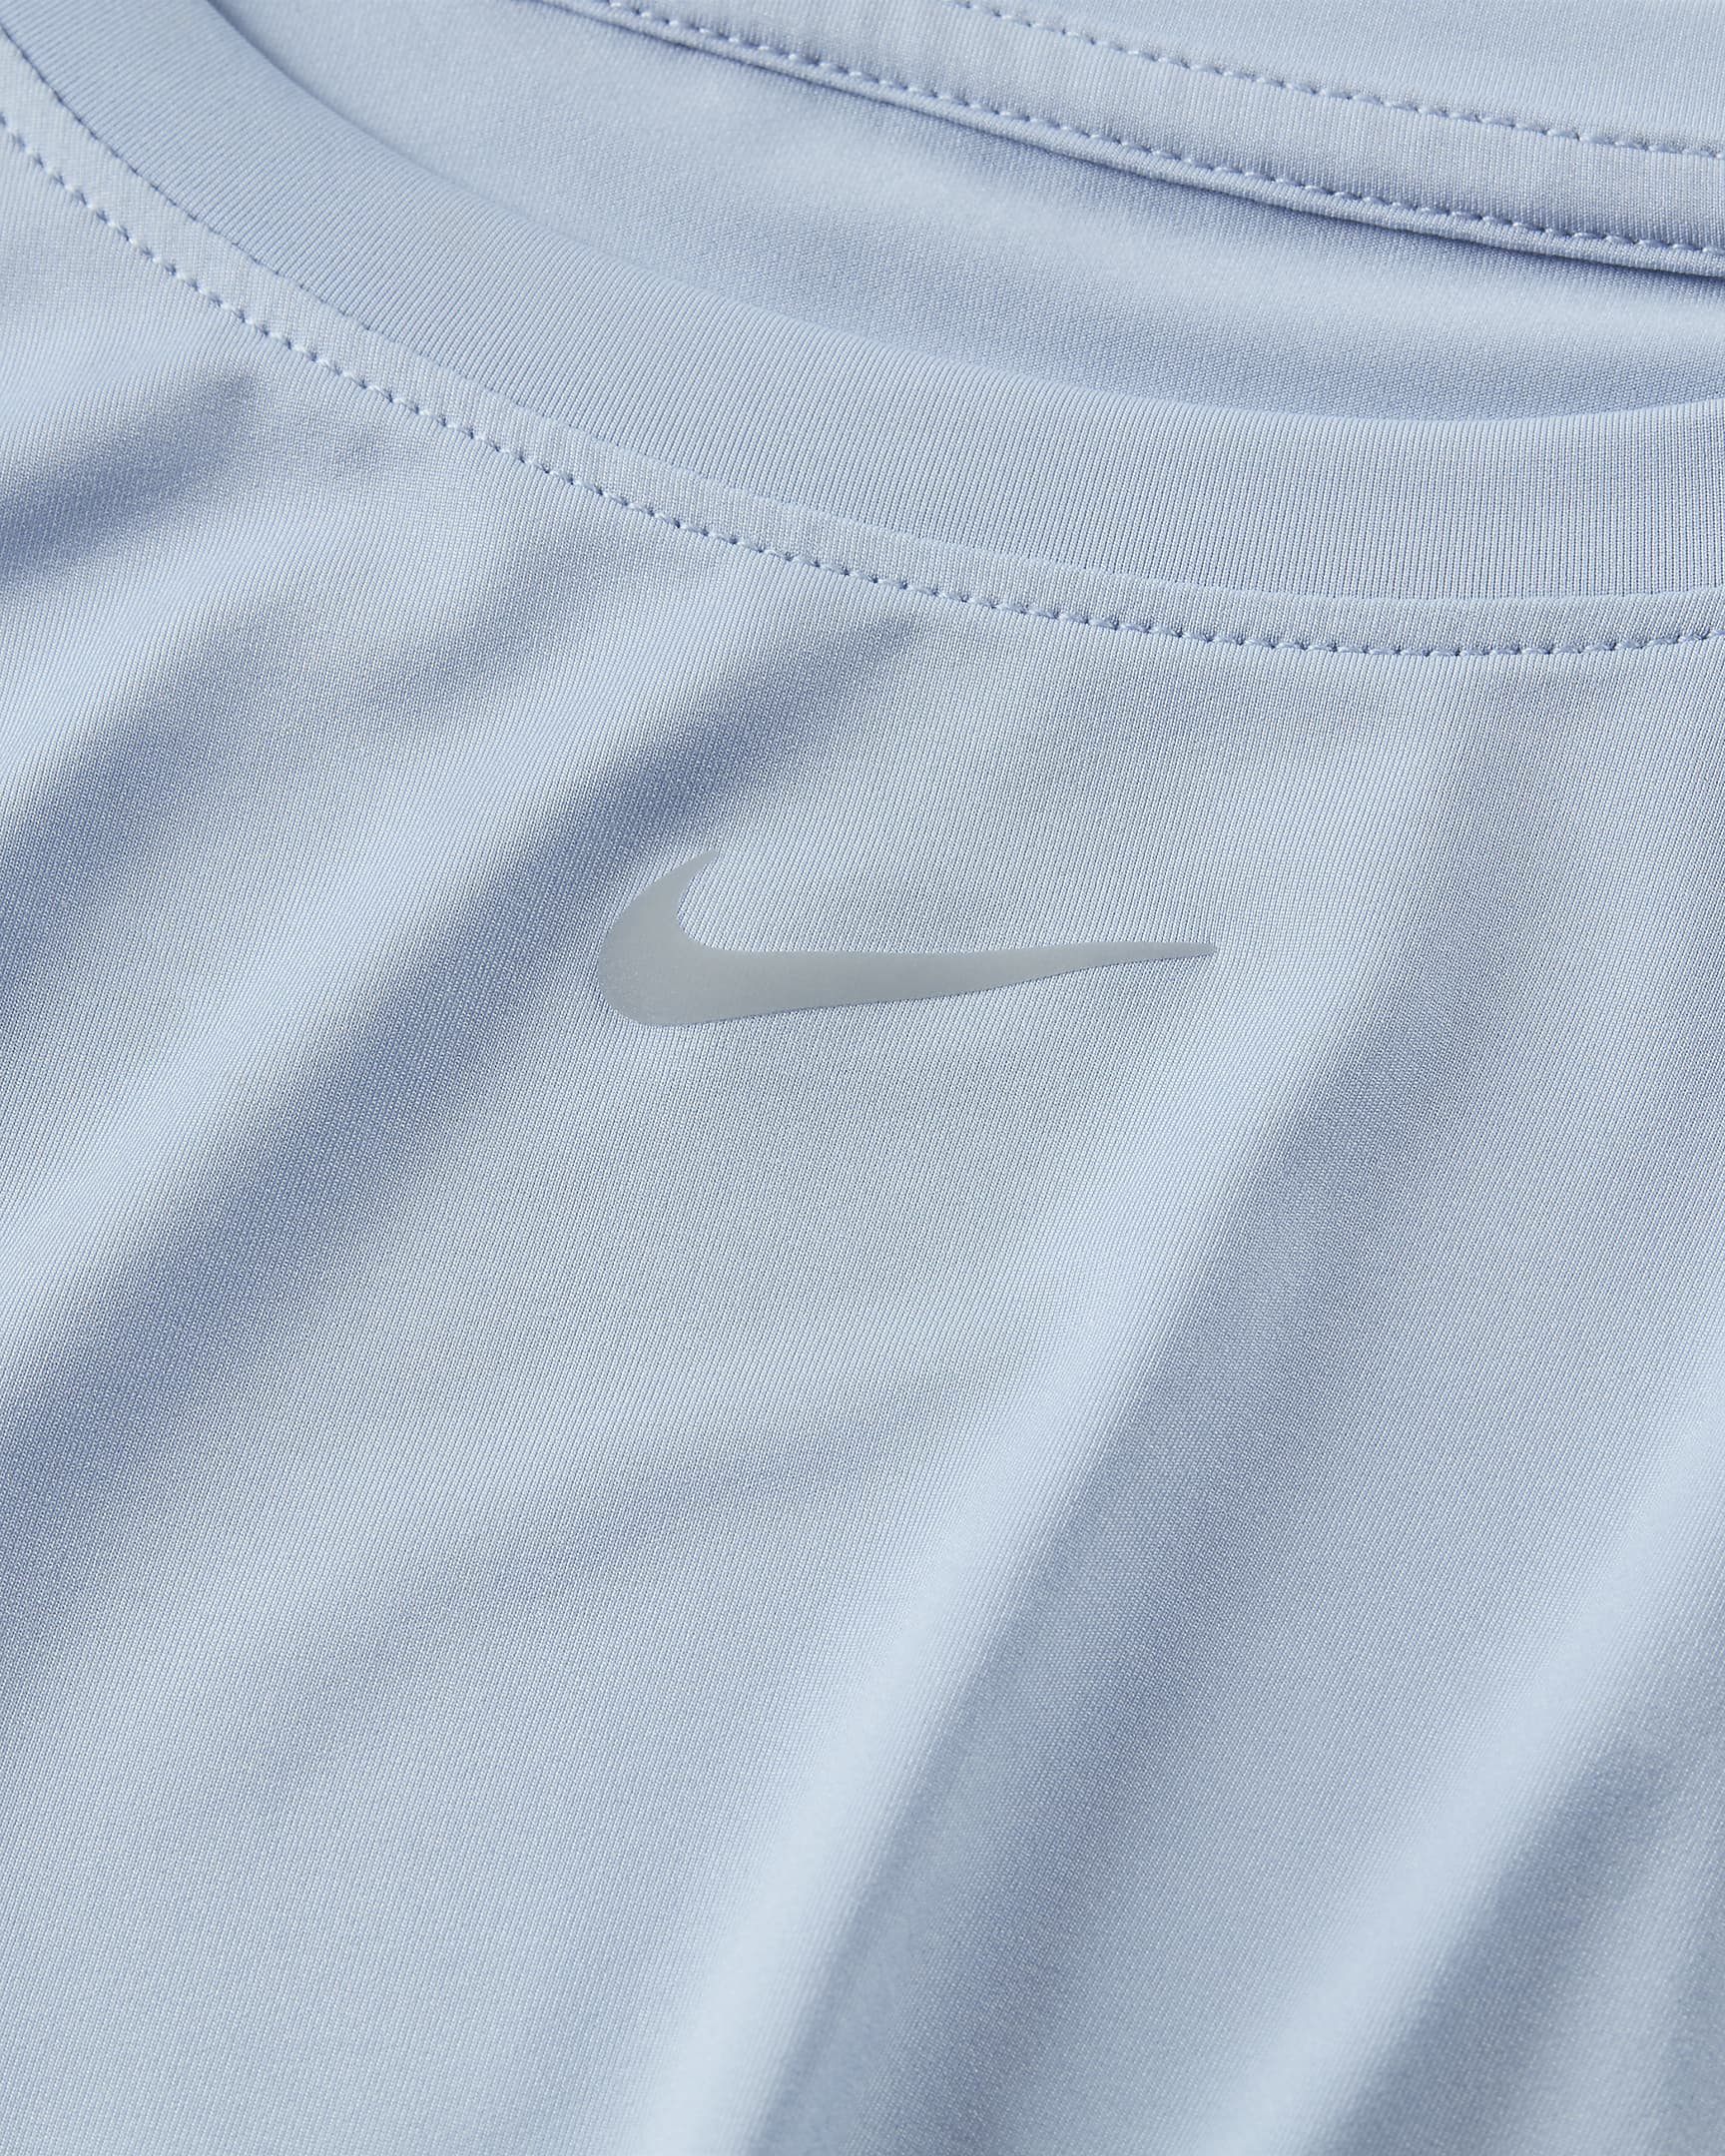 Nike One Classic Women's Dri-FIT Short-Sleeve Top - Light Armory Blue/Black